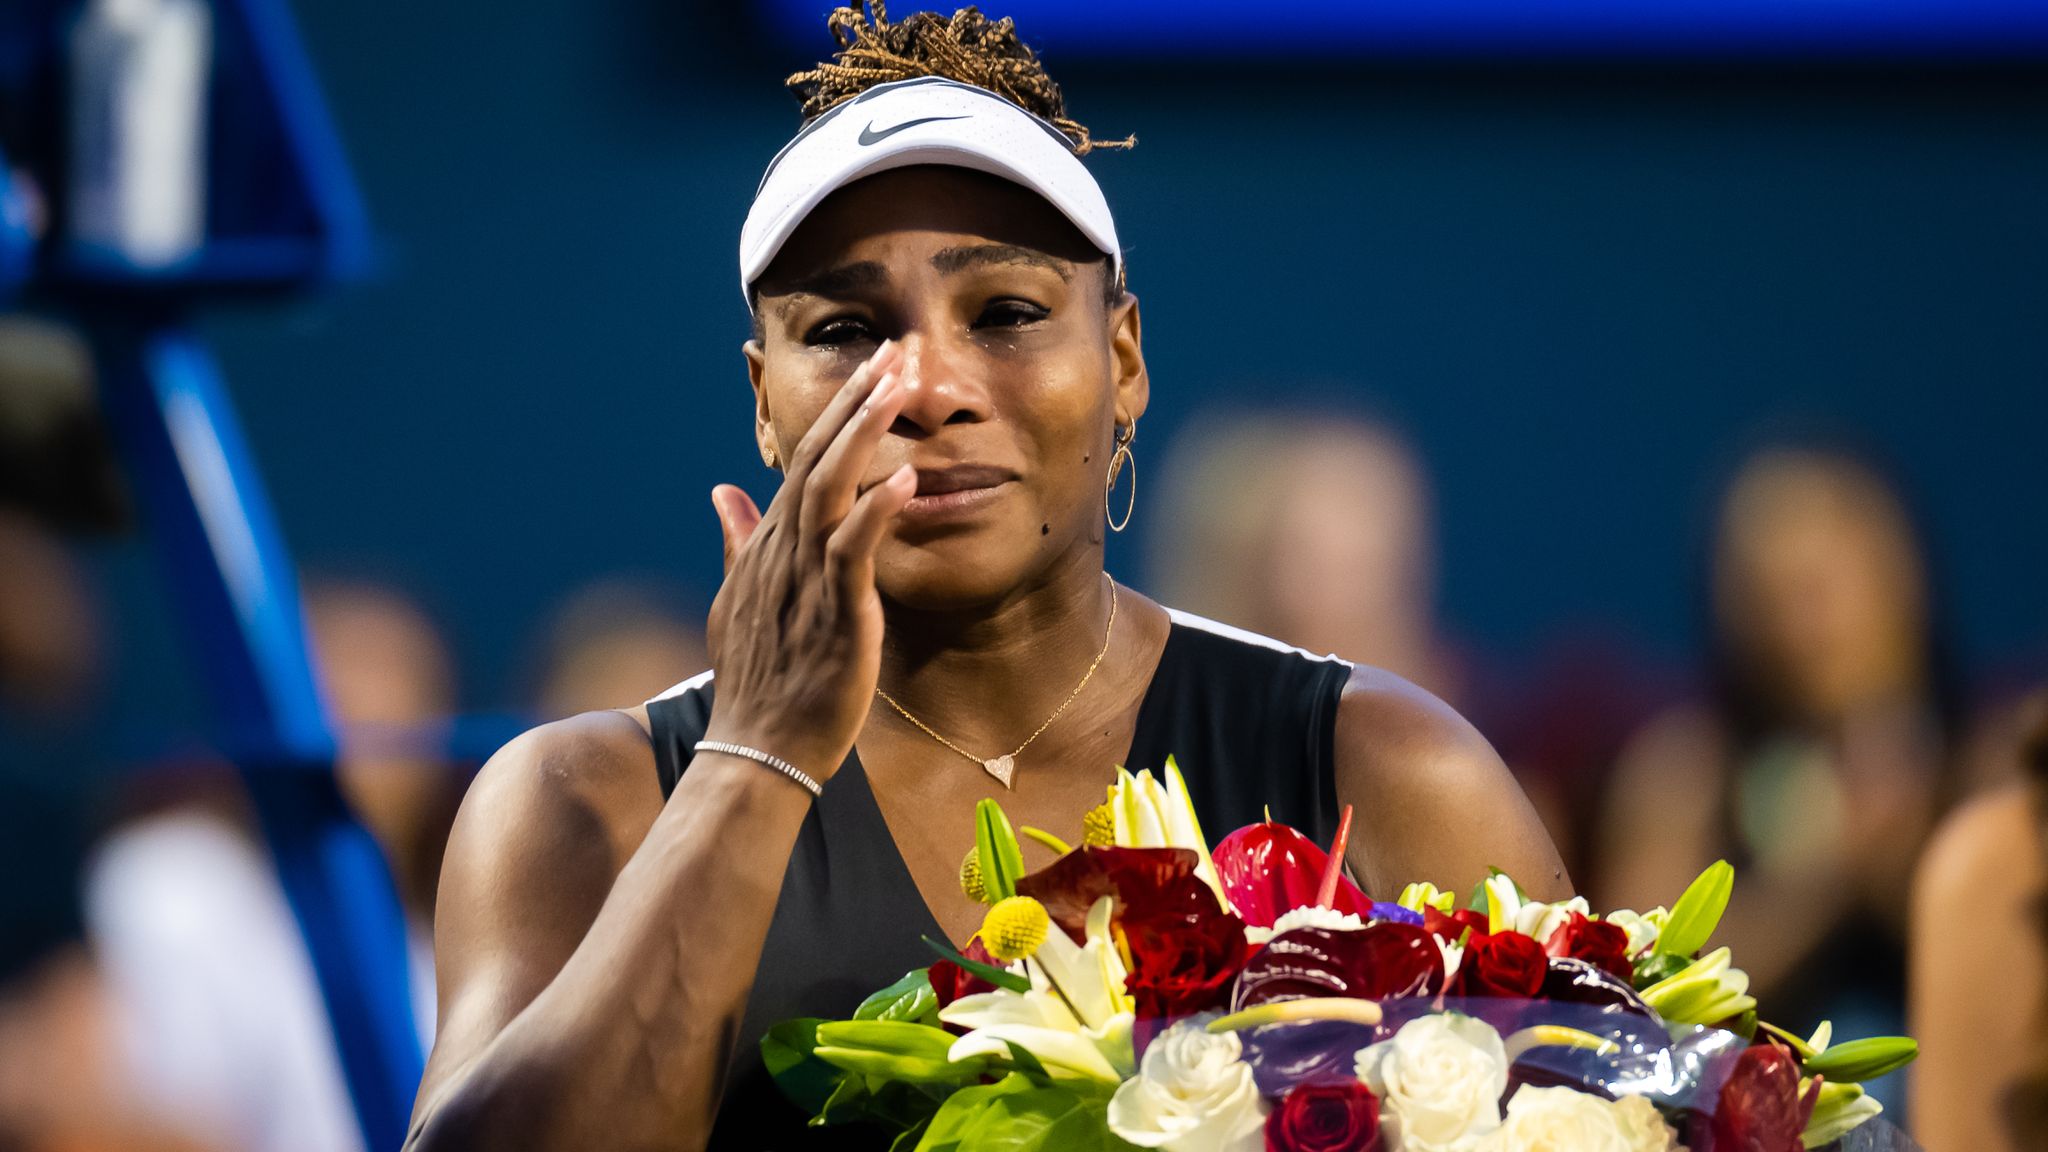 Serena Williams U.S Open defeat